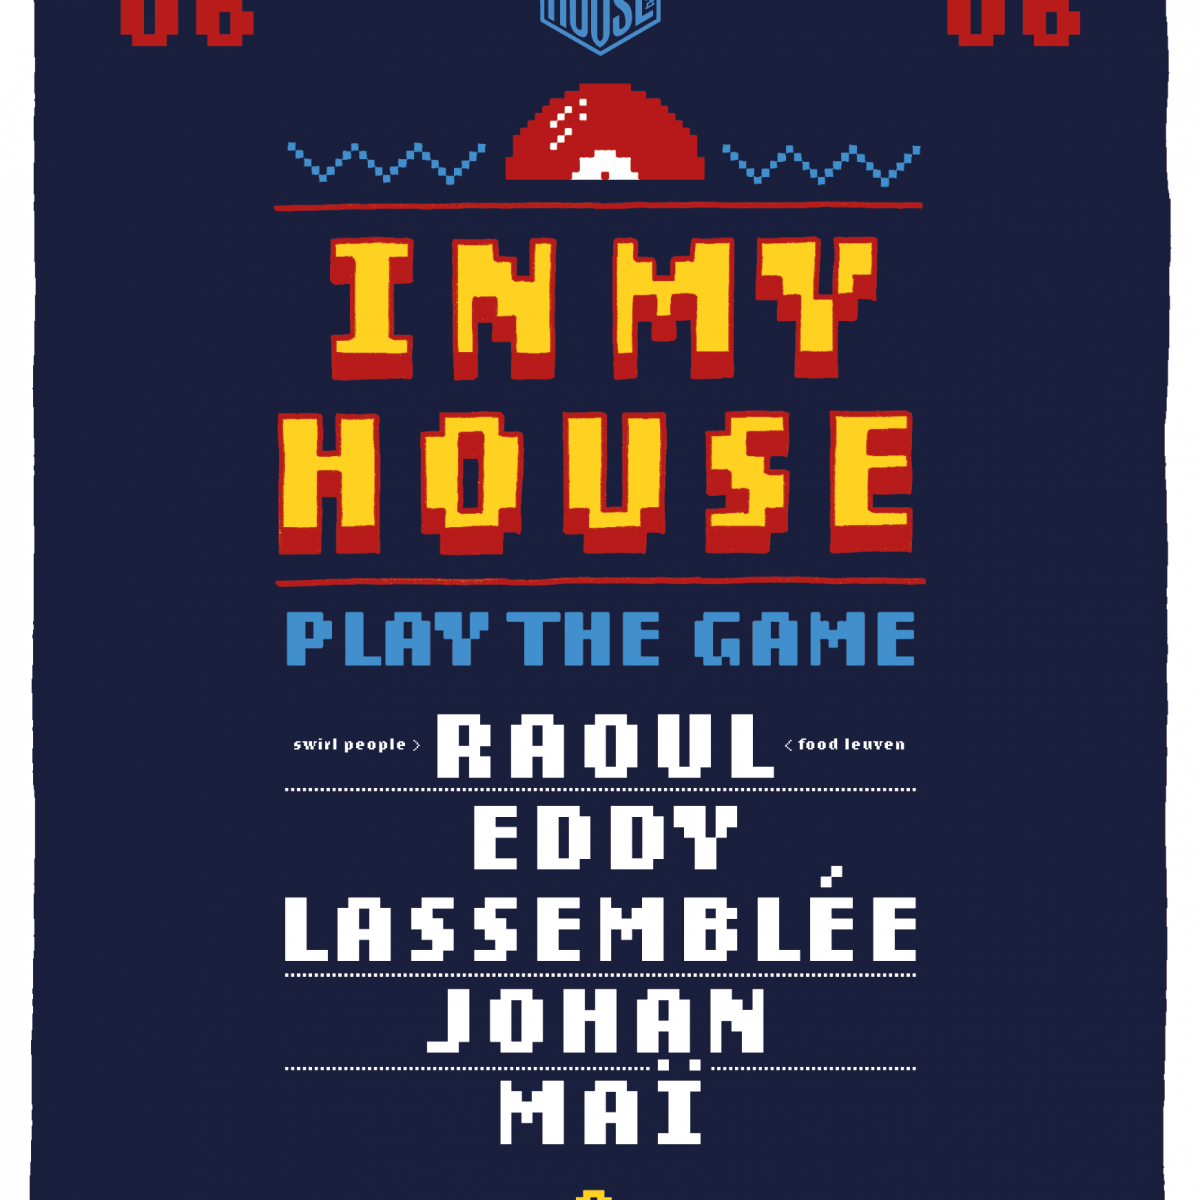 INMYHOUSE « PLAY THE GAME » / RAOUL - EDDY LASSEMBLEE - JOHAN - MAI